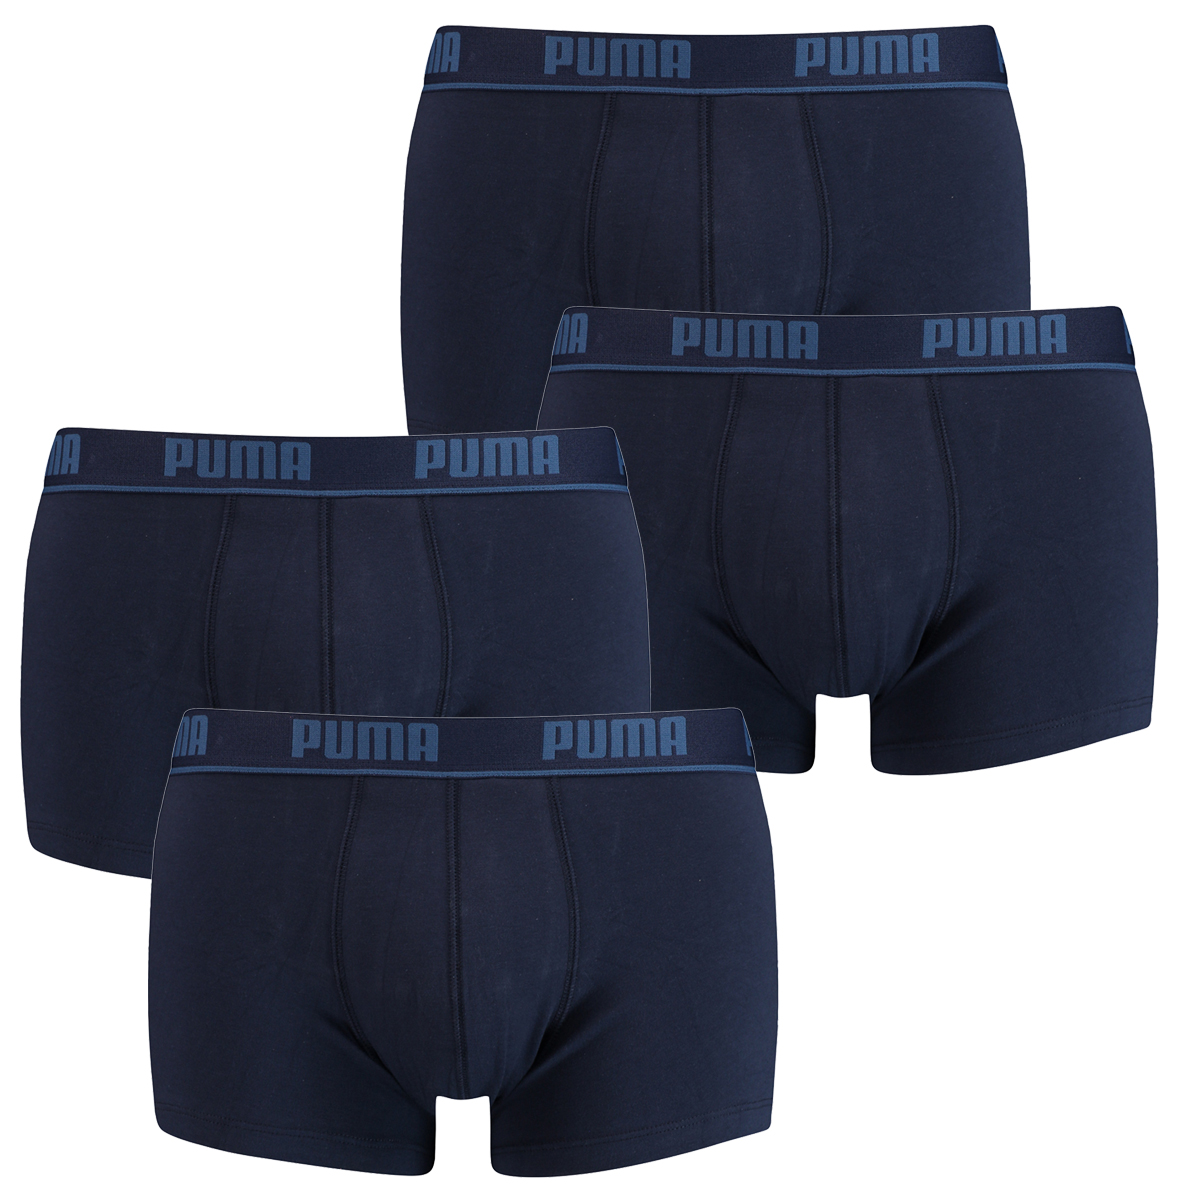 4 er Pack Puma Short Boxer Boxershorts Men Pant Unterwäsche kurz NAVY